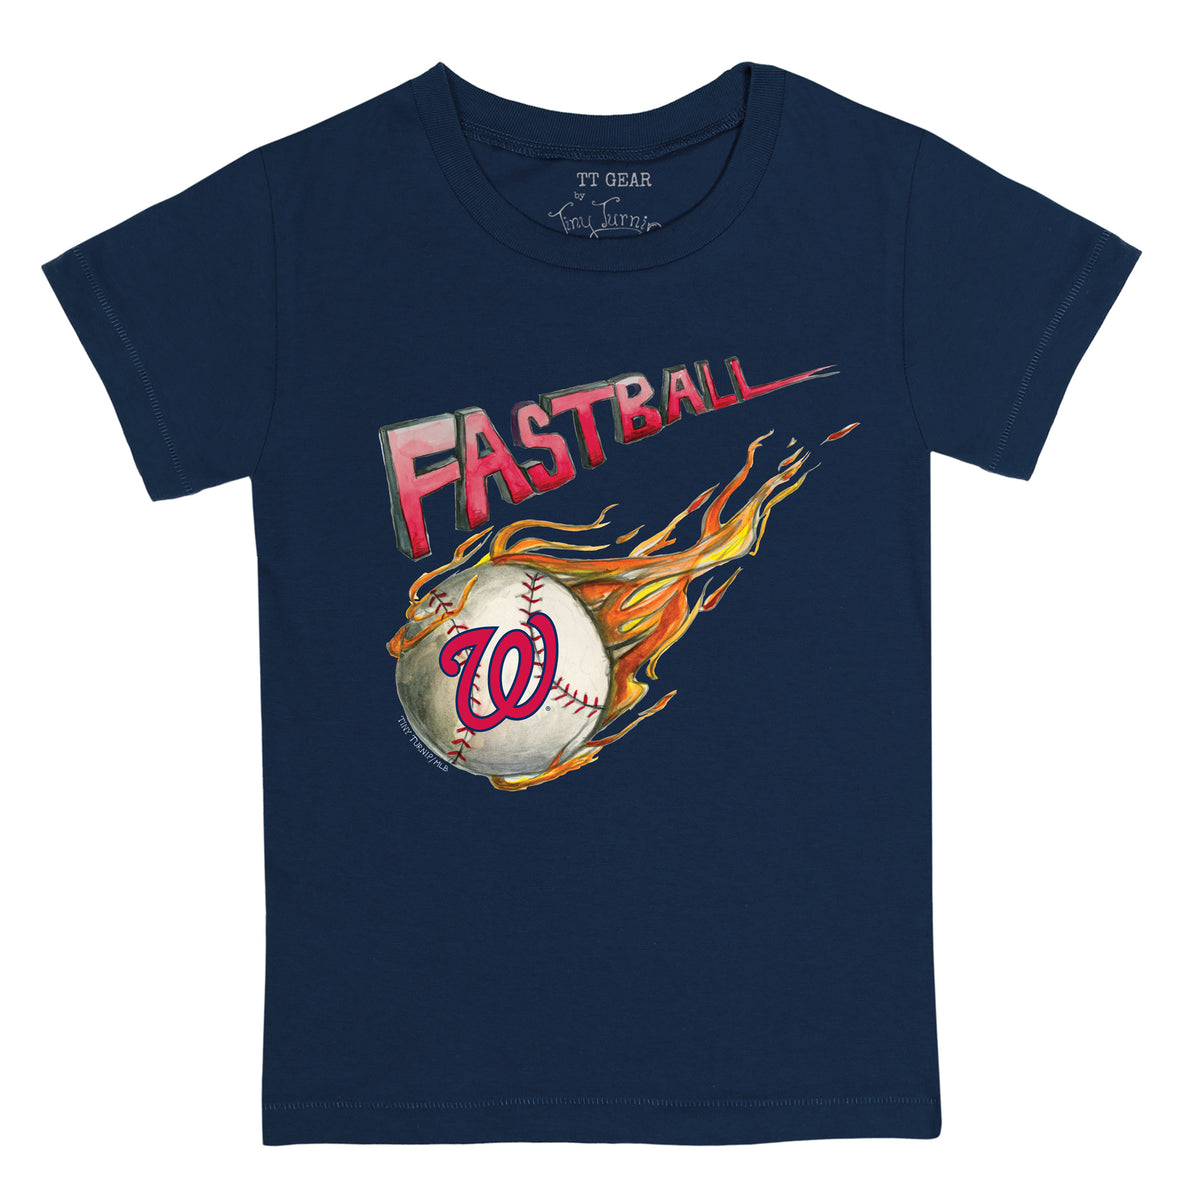 Washington Nationals Fastball Tee Shirt